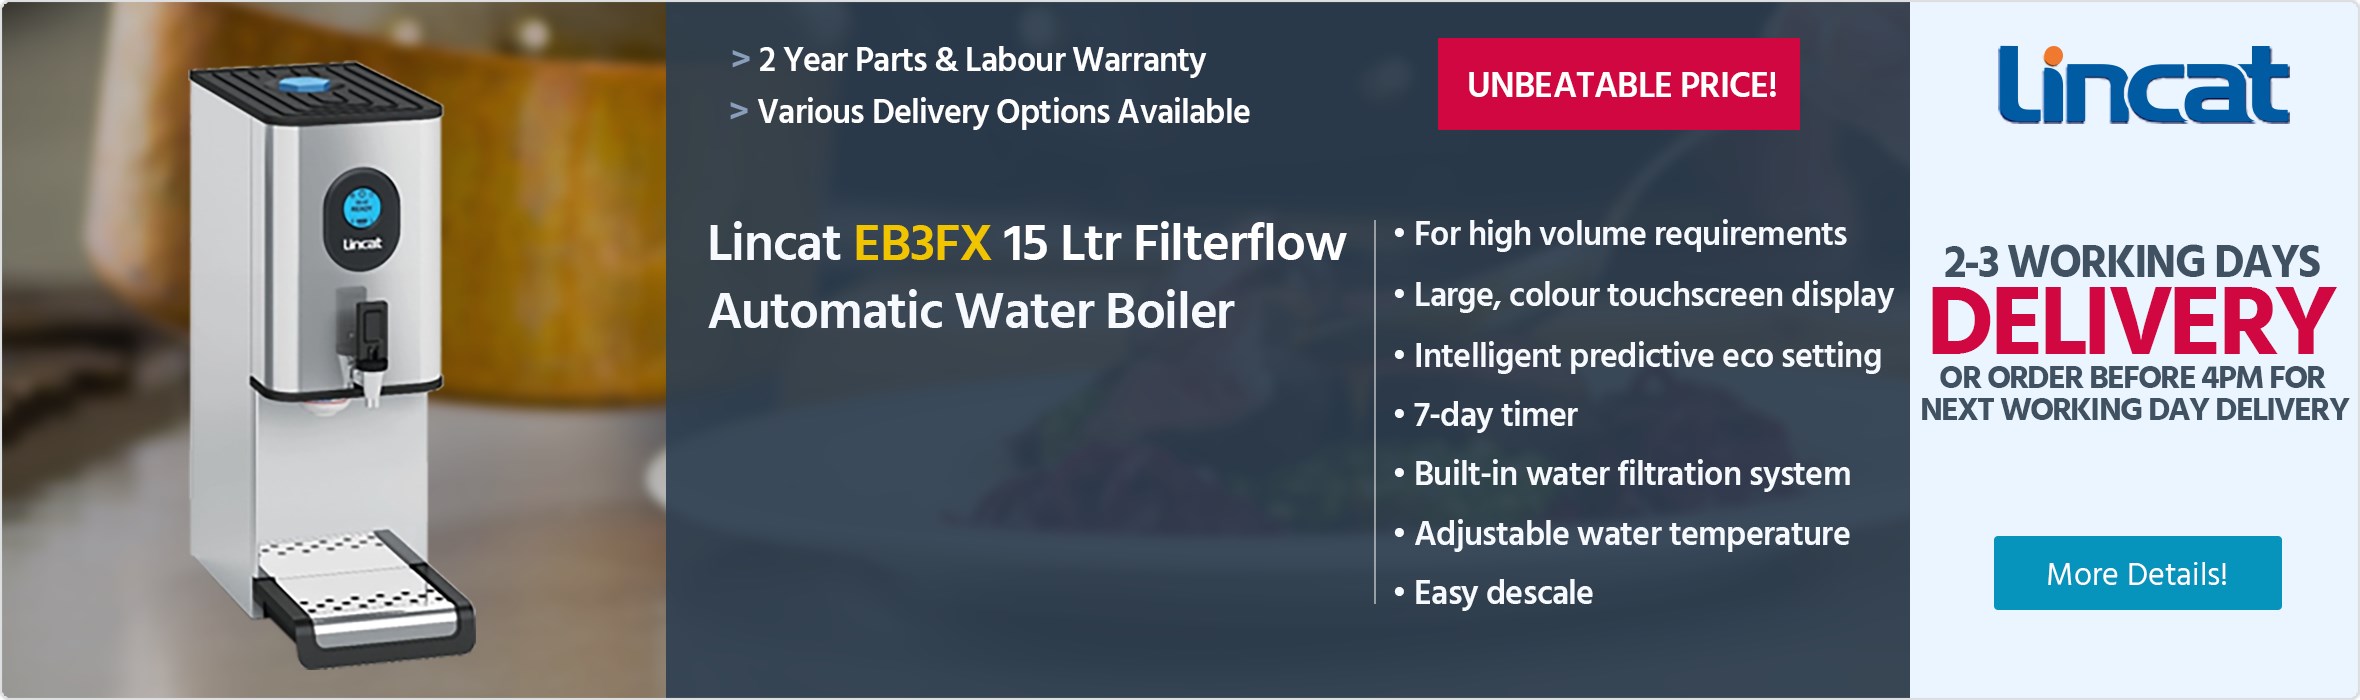 Lincat EB3FX 11 Ltr Filterflow Automatic Water Boiler